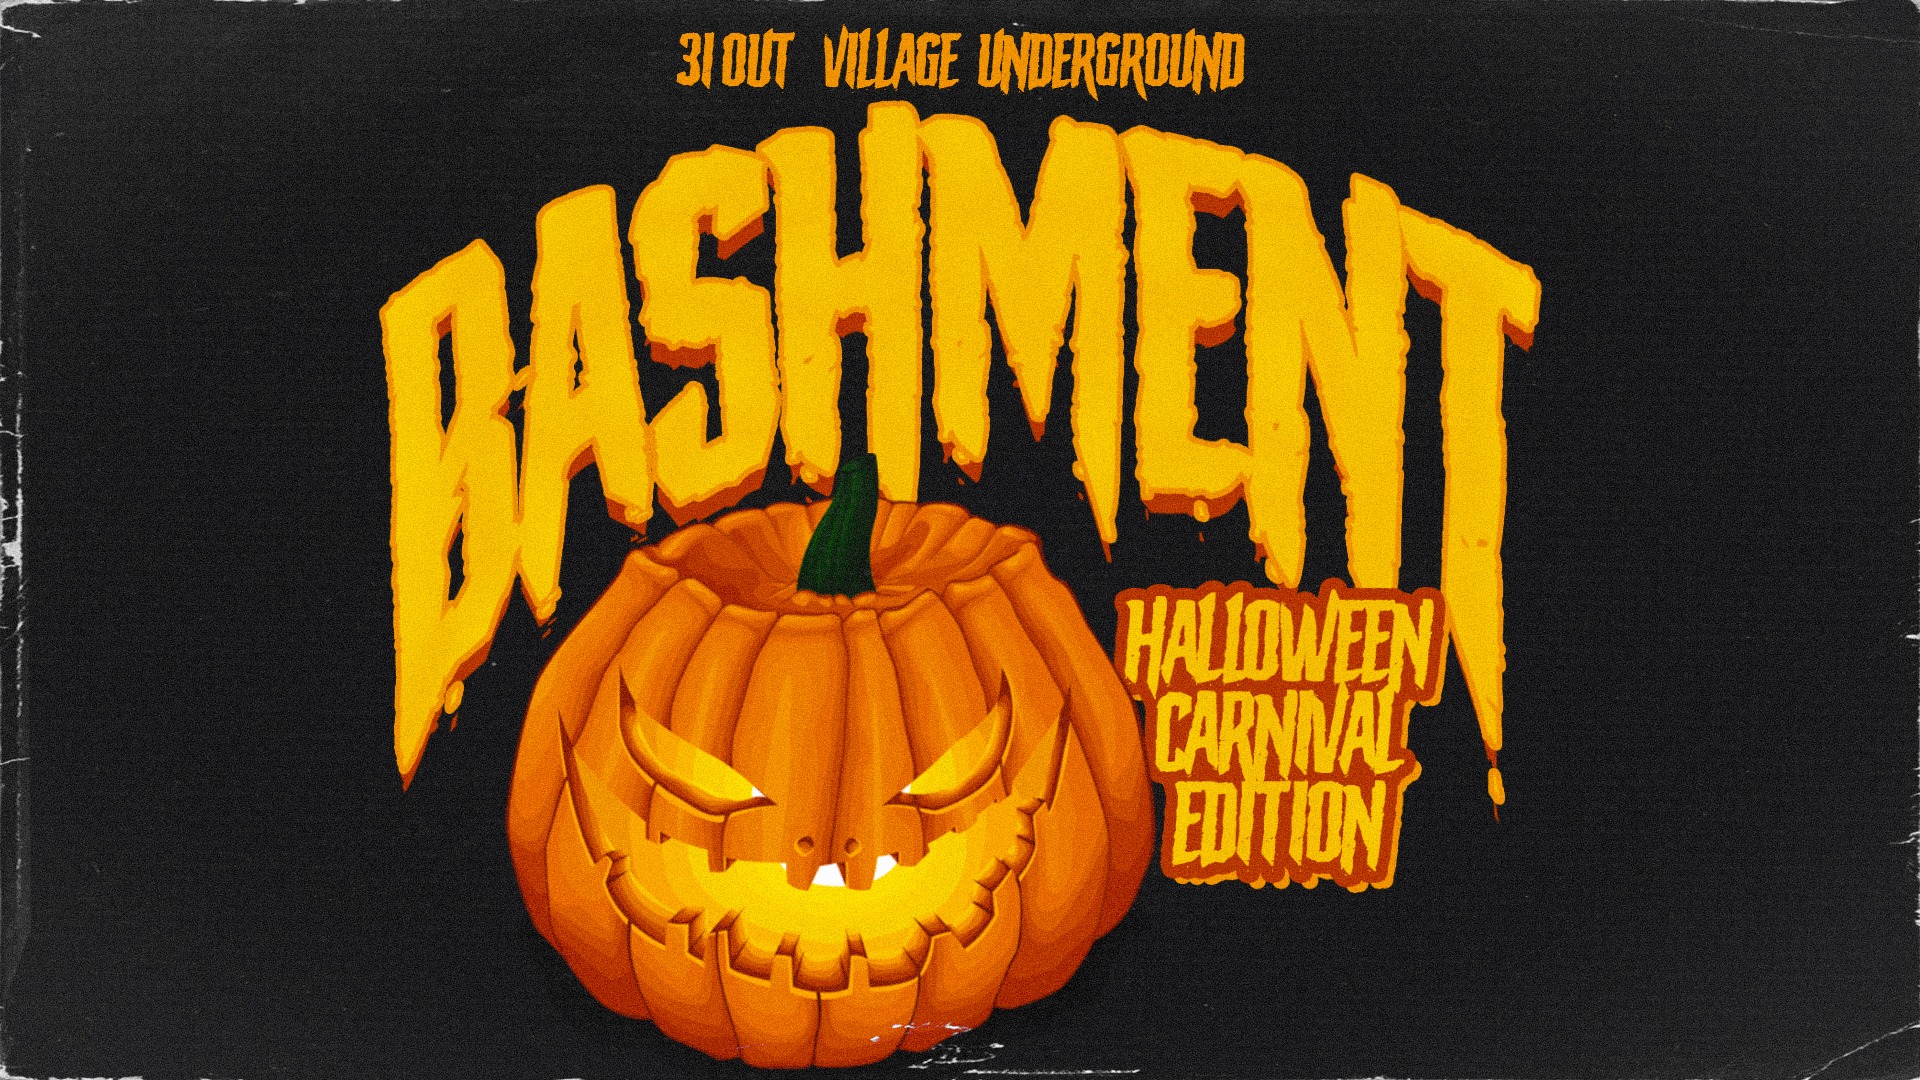 Bashment Halloween Carnival Edition - Village Underground Lisboa